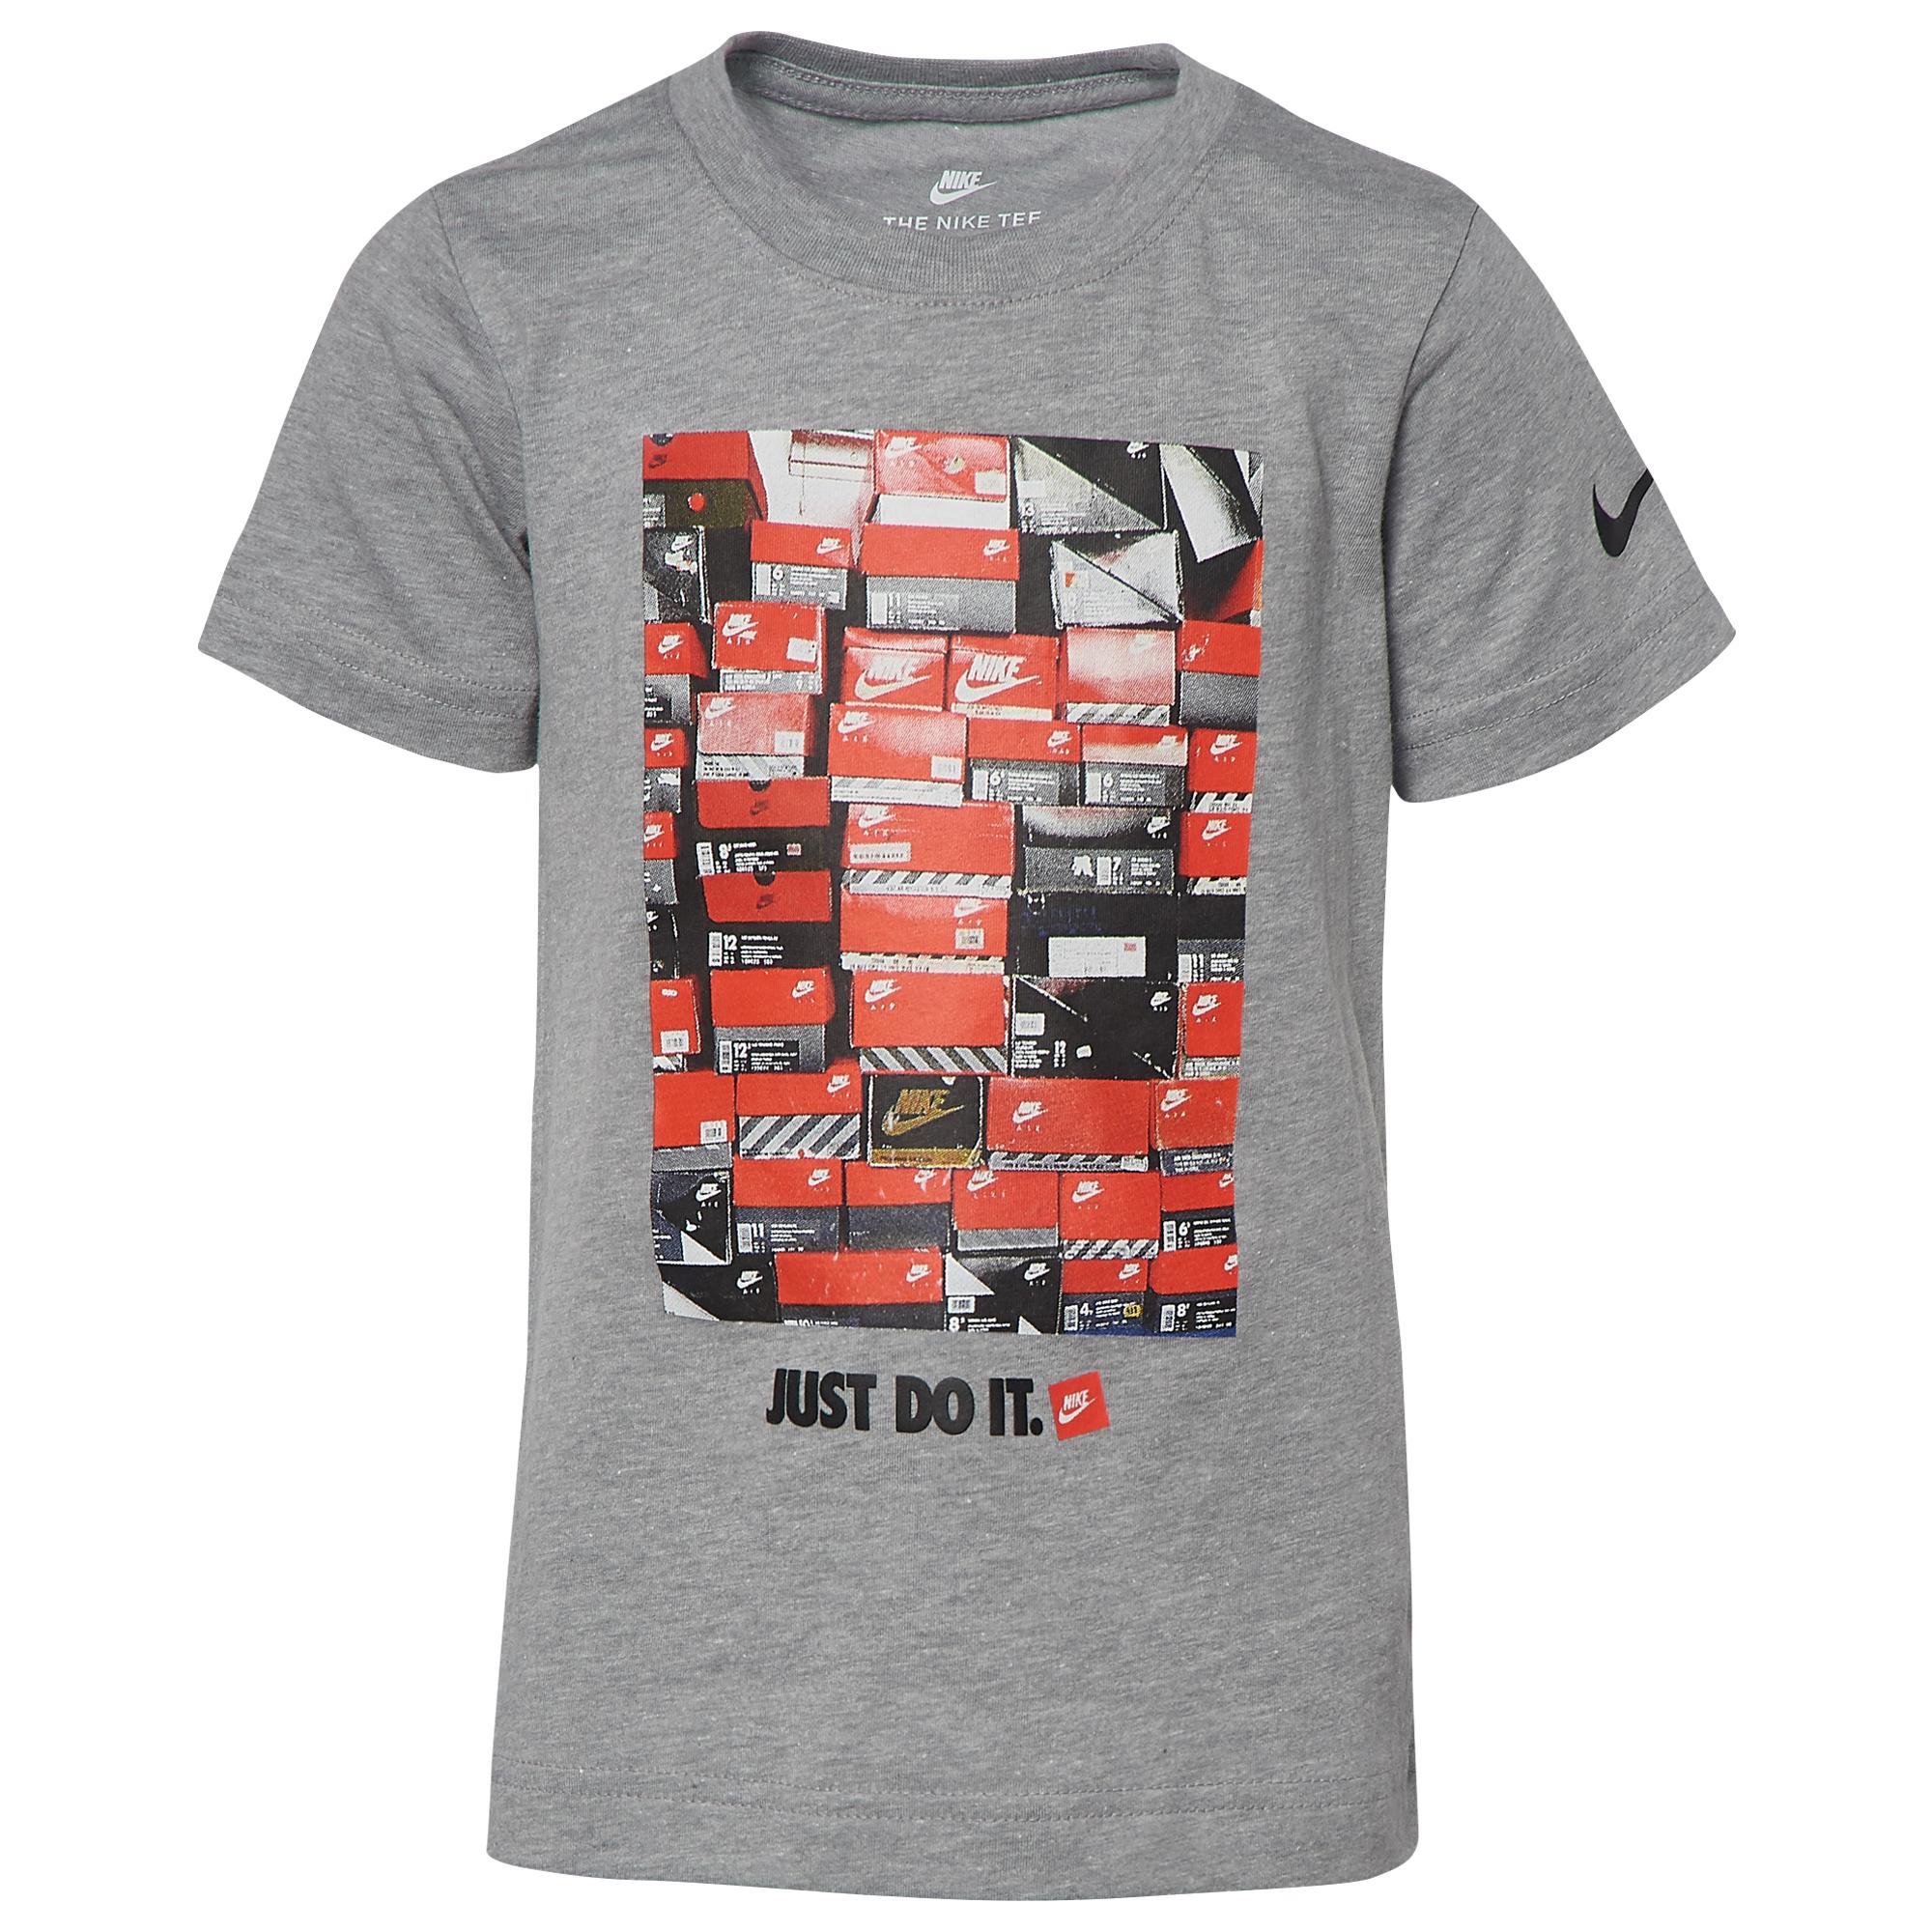 Nike Cotton Jdi Shoebox T-shirt in Gray for Men - Lyst